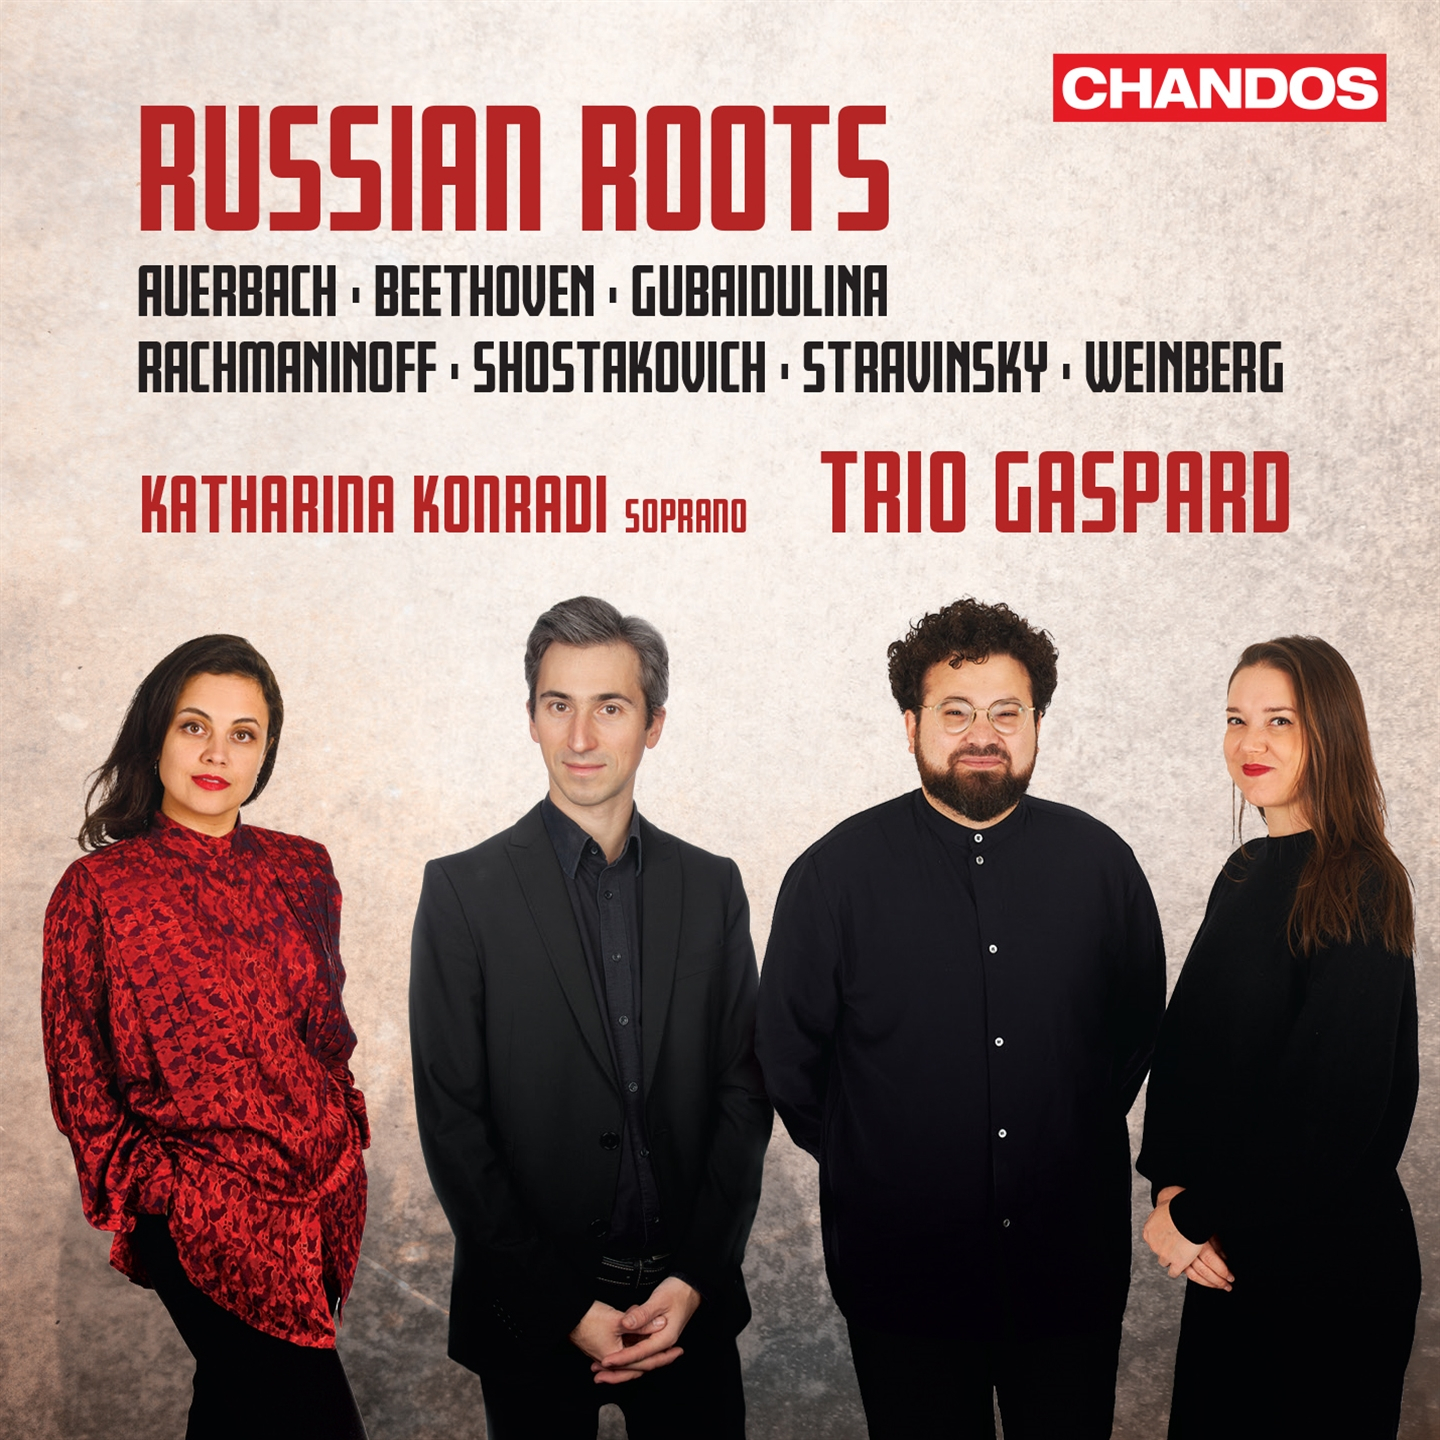 Katharina Konradi, Trio Gaspard - Russian Roots - Photo 1/1